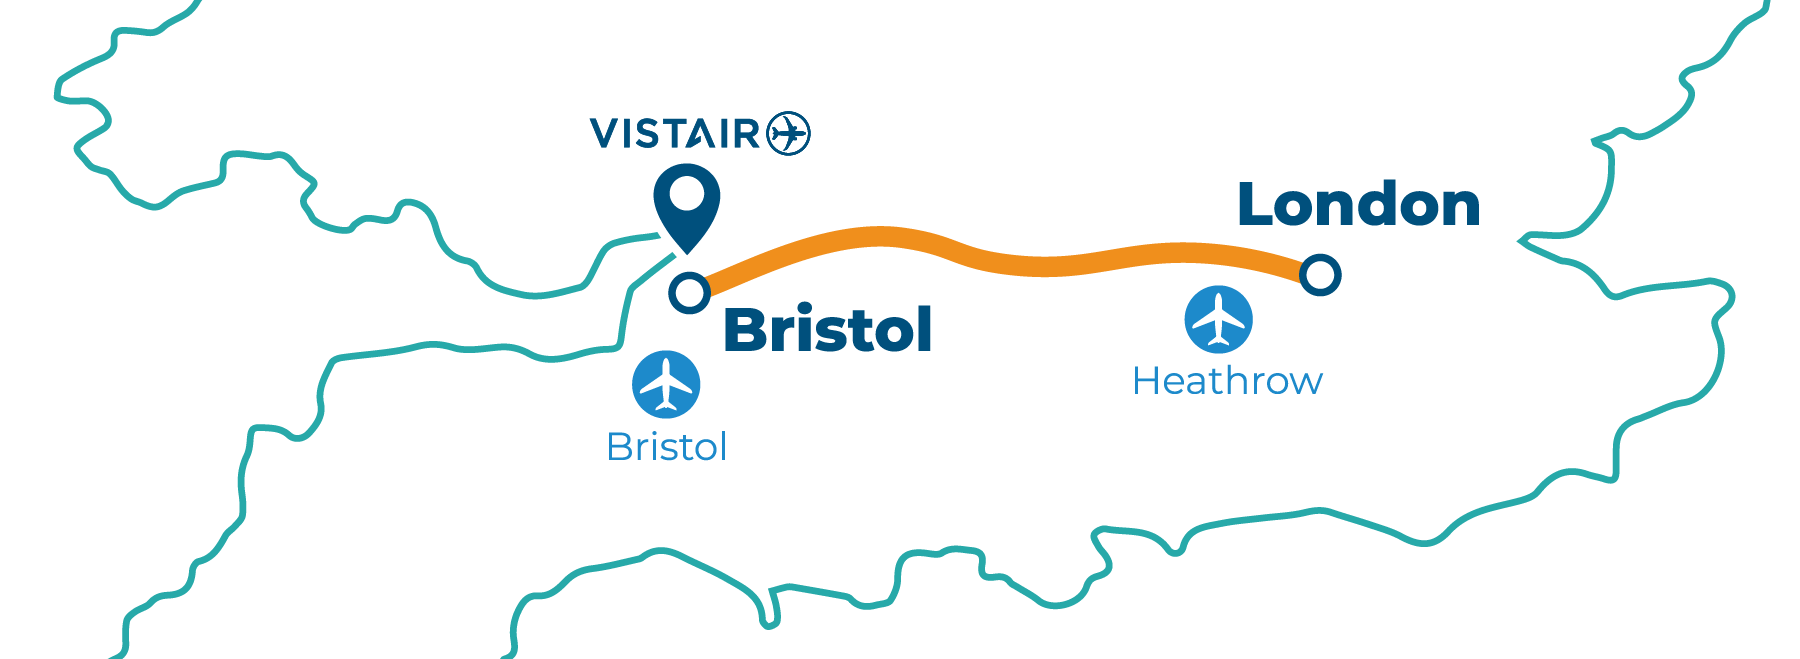 Contact Us Vistair - Map Bristol London rail,road, air connections